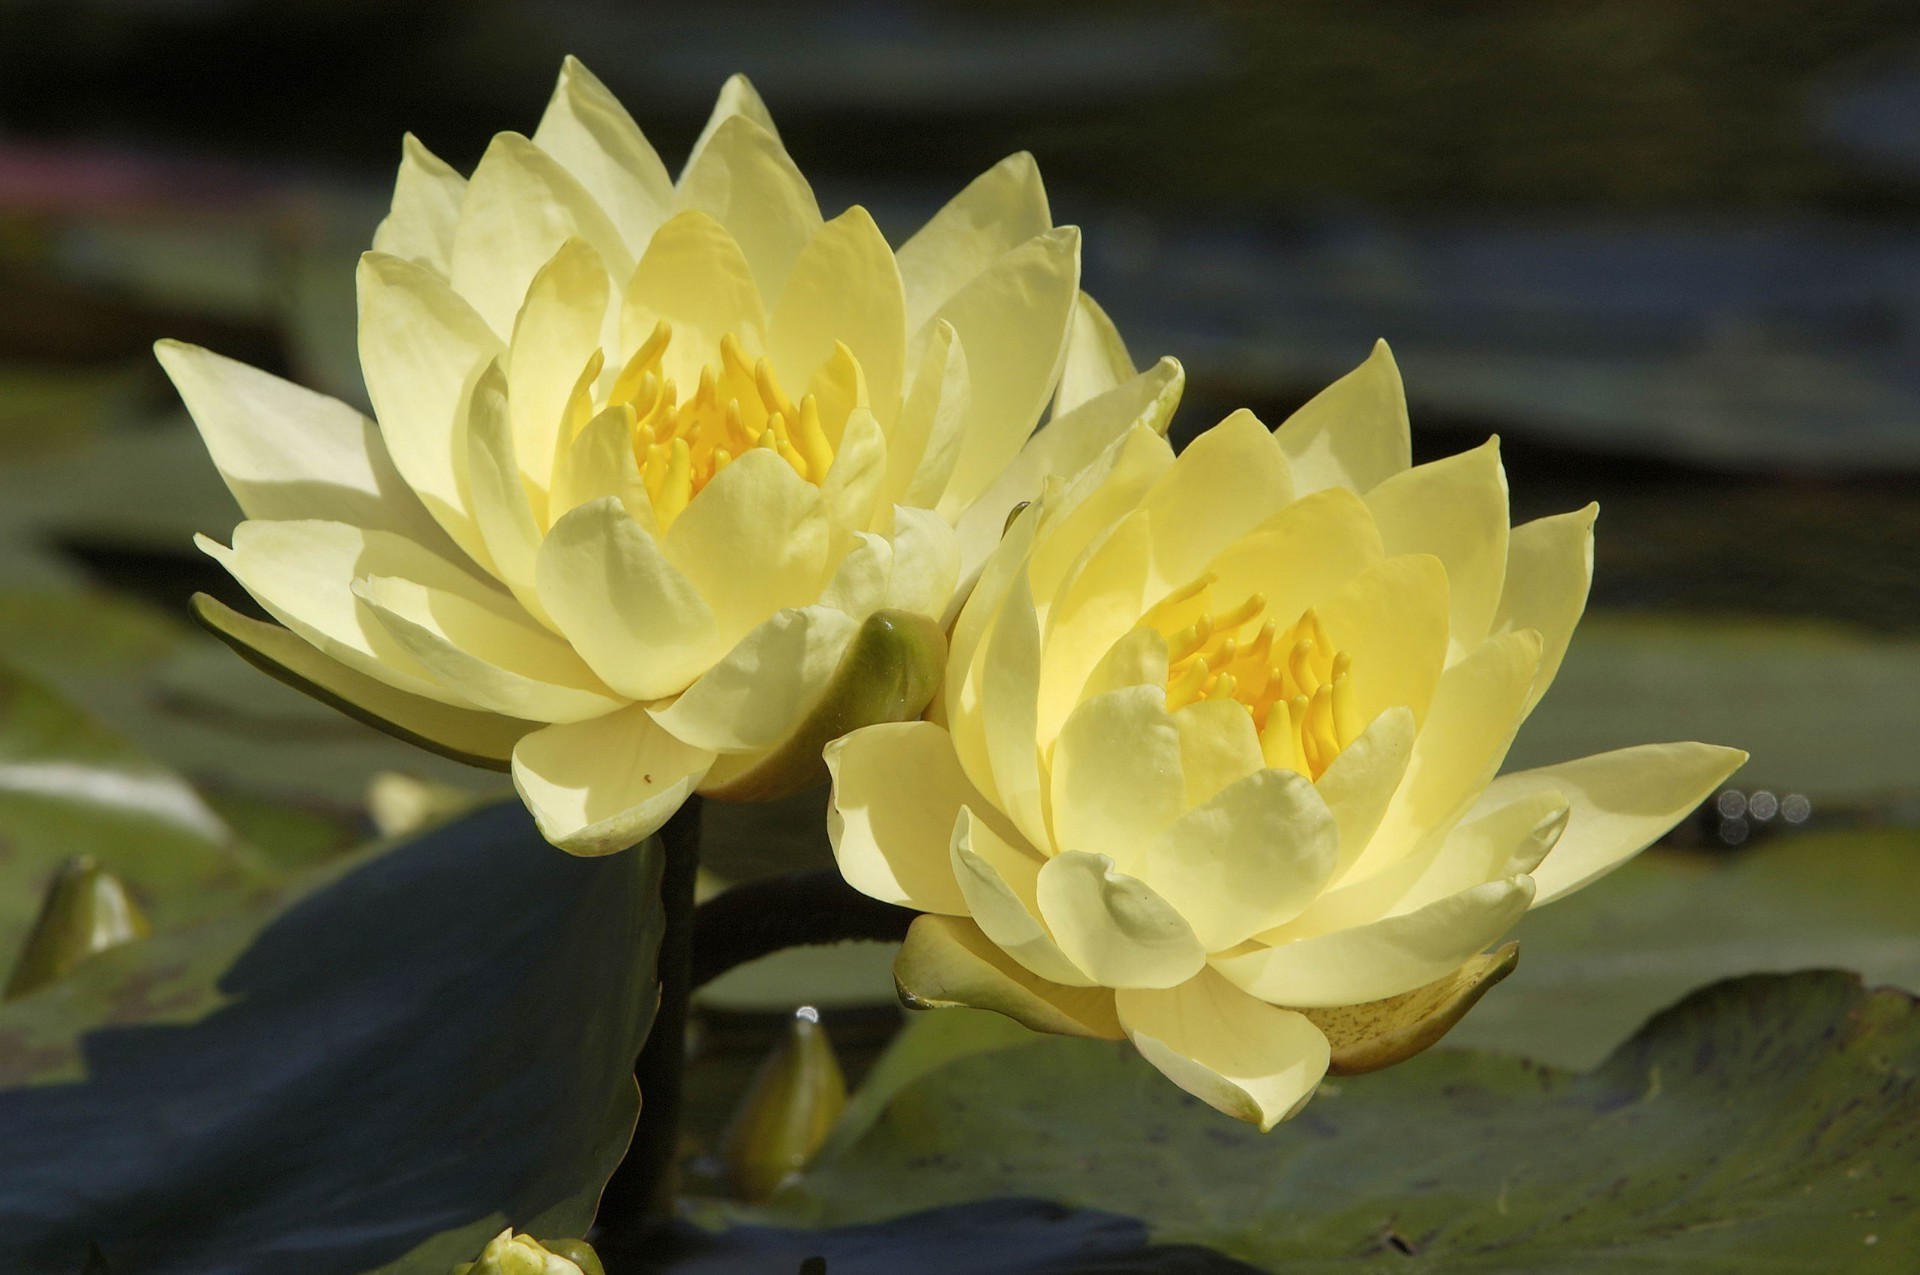 lily lotus pool flower leaf flora nature blooming garden petal waterlily botanical summer aquatic zen floral meditation